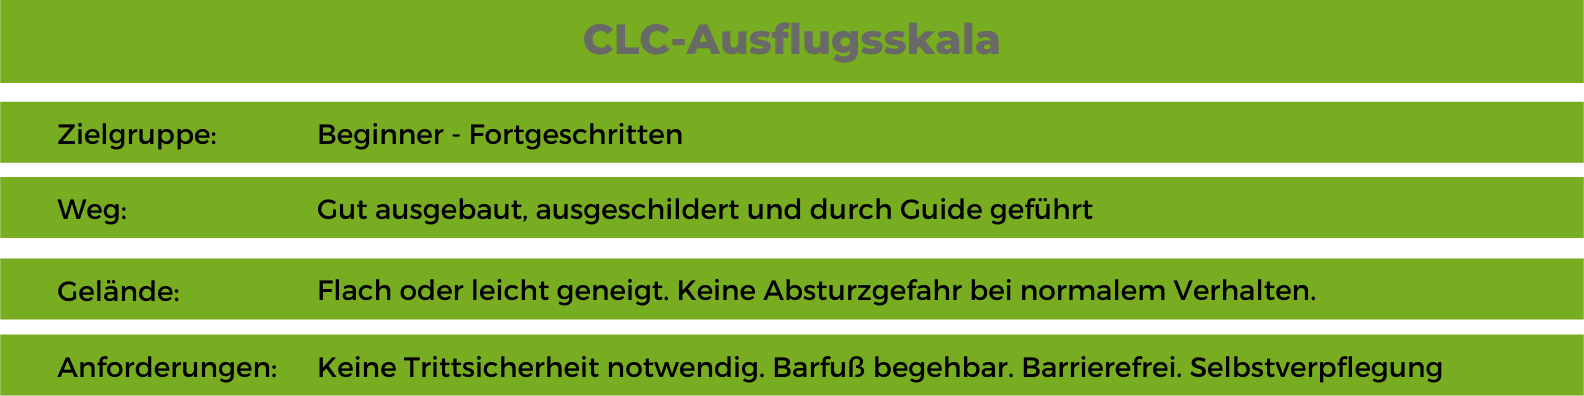 CLC-Ausflugsskala